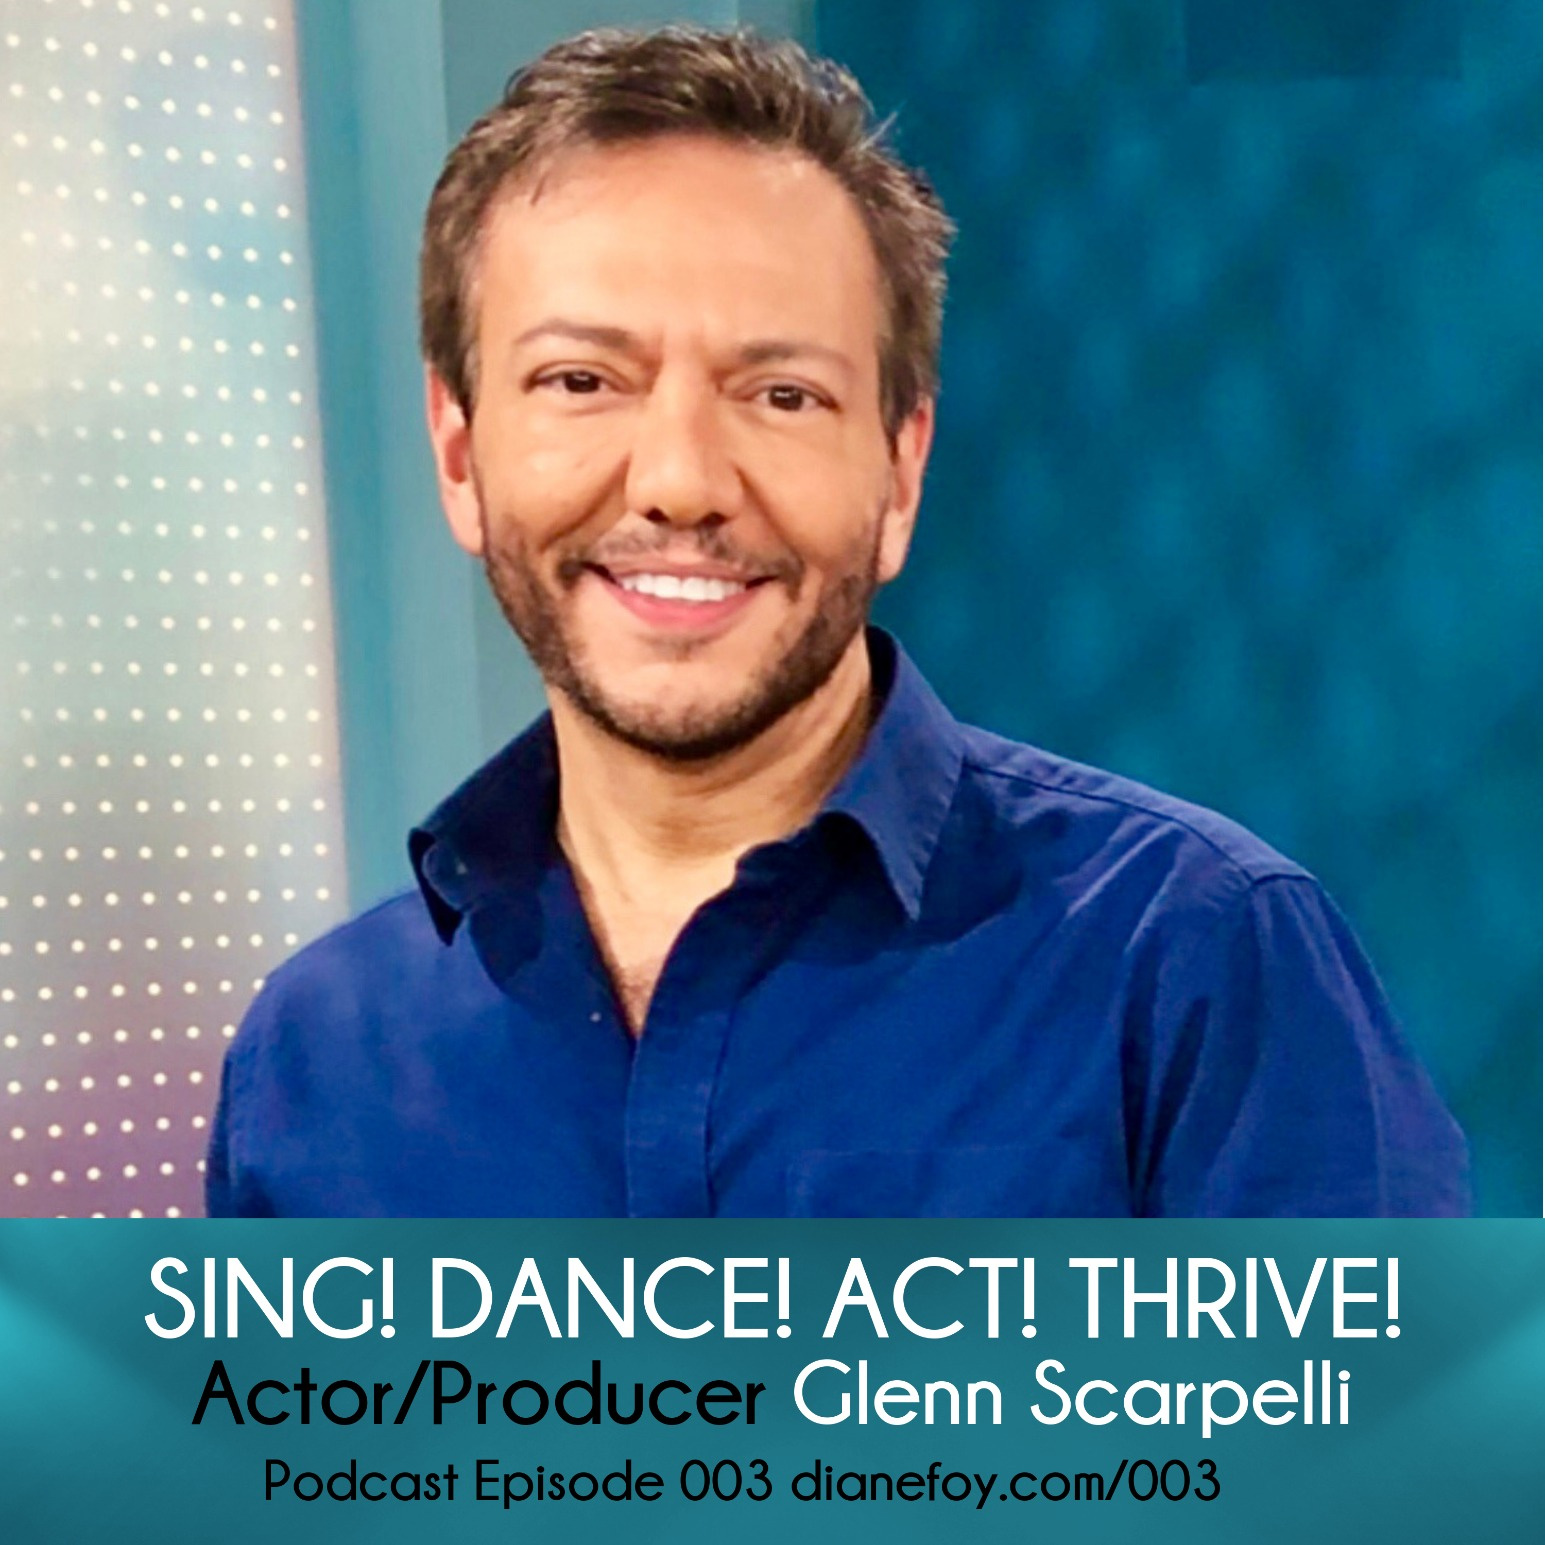 Glenn Scarpelli, Actor/Producer